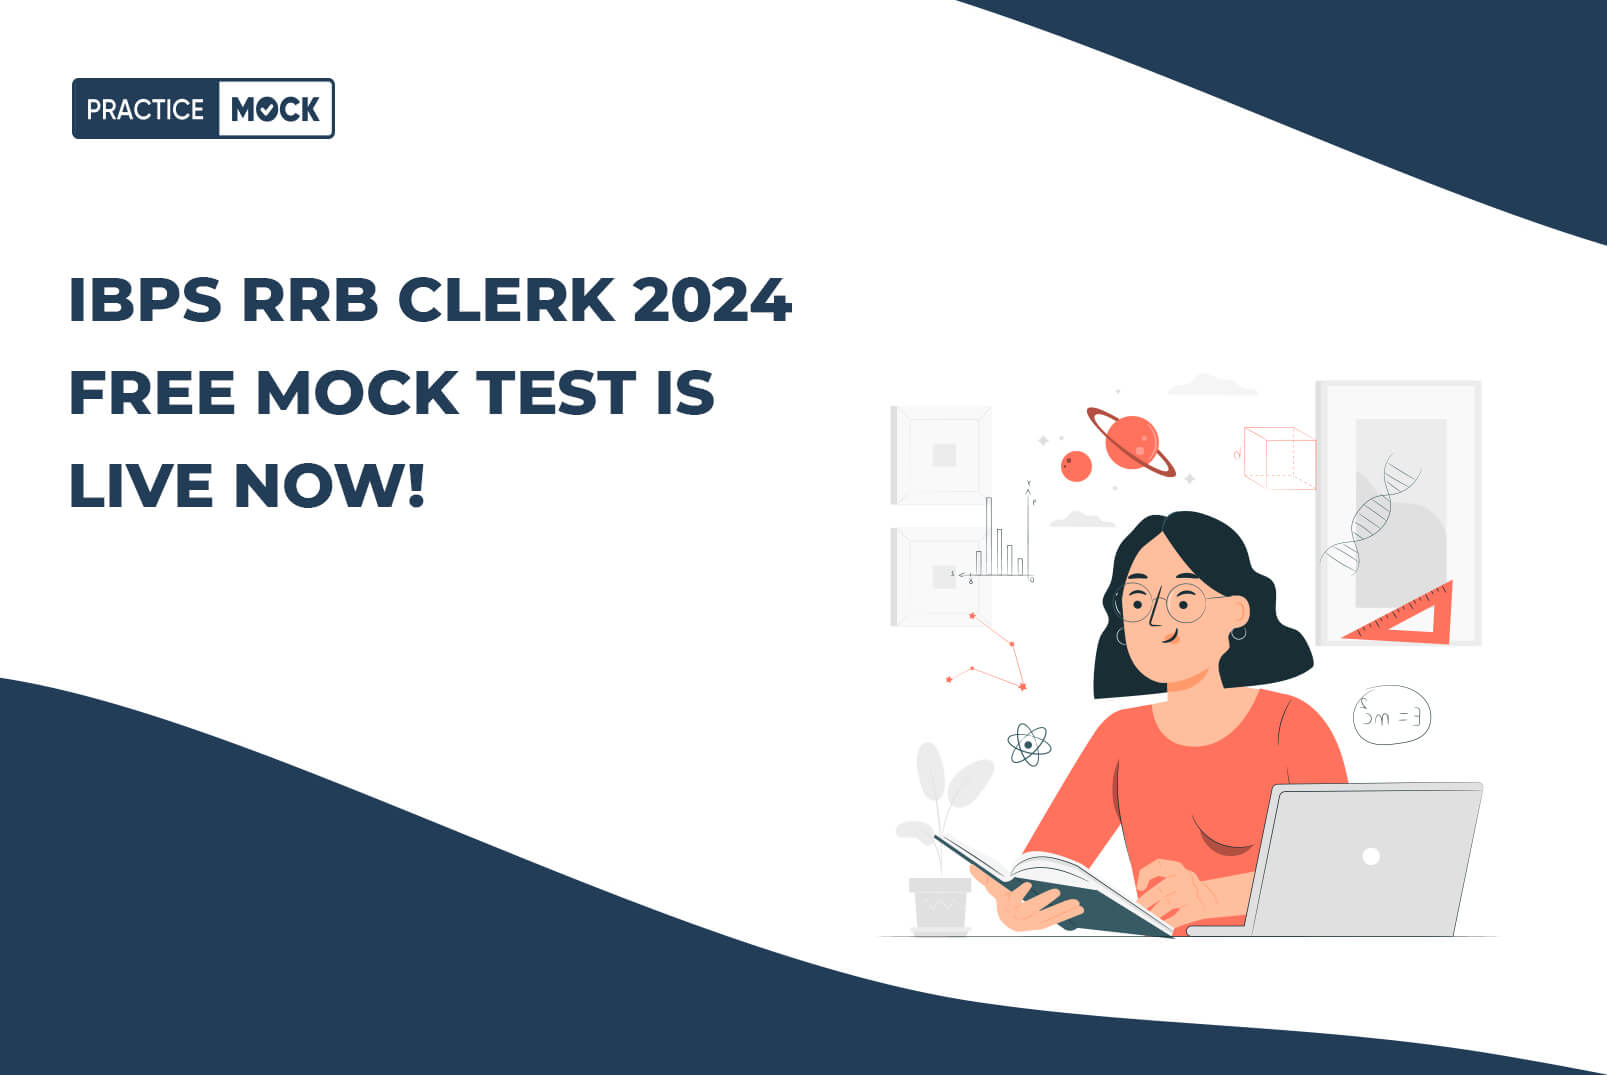 20 Amazing Benefits of IBPS RRB Clerk 2024 Free Mock Test